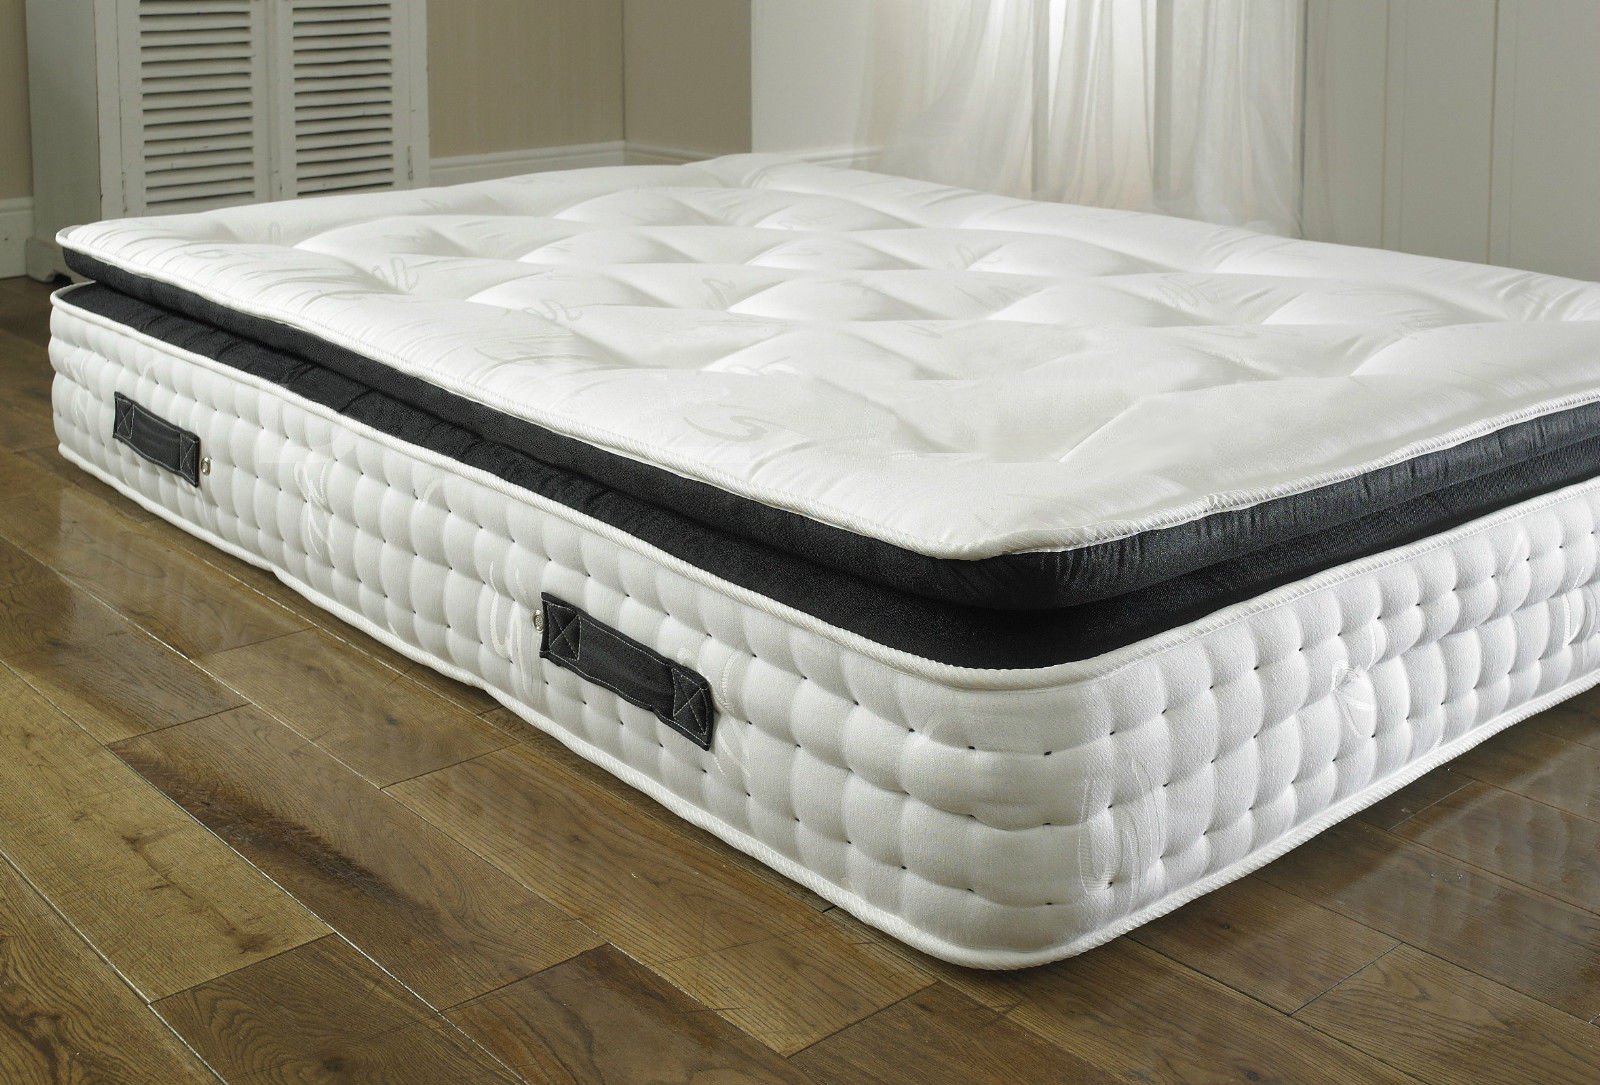 Paul Divan Bed with 2000 Pocket Spring Memory Foam Mattress